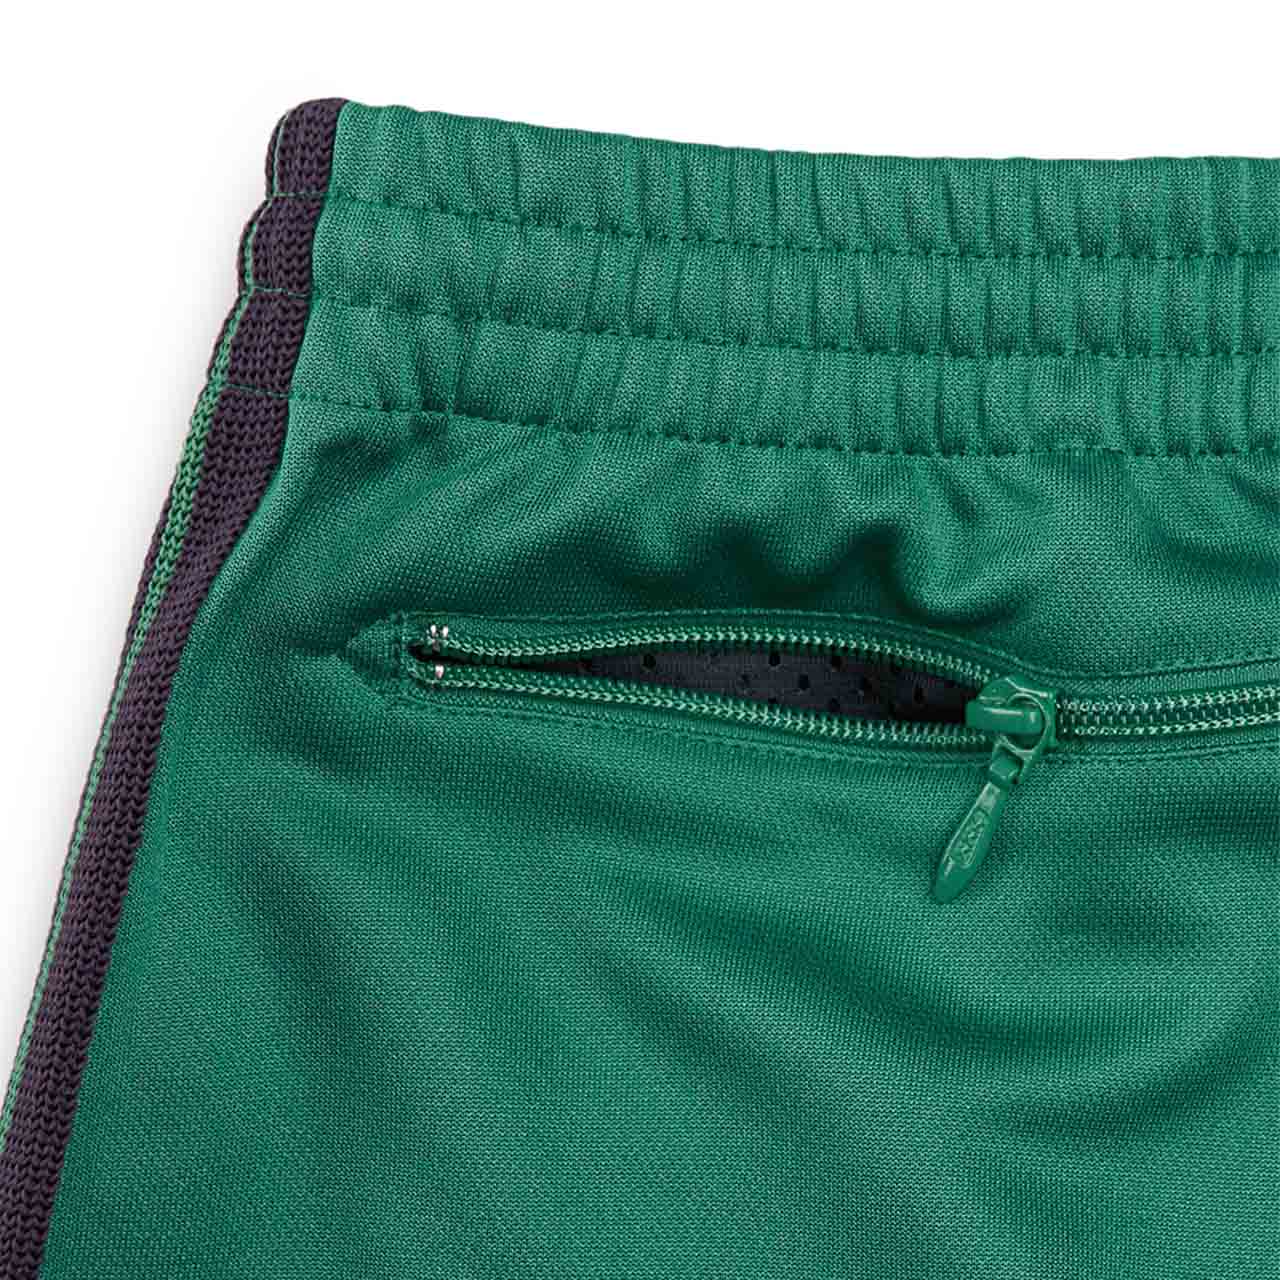 needles side stripe track pants (emerald)